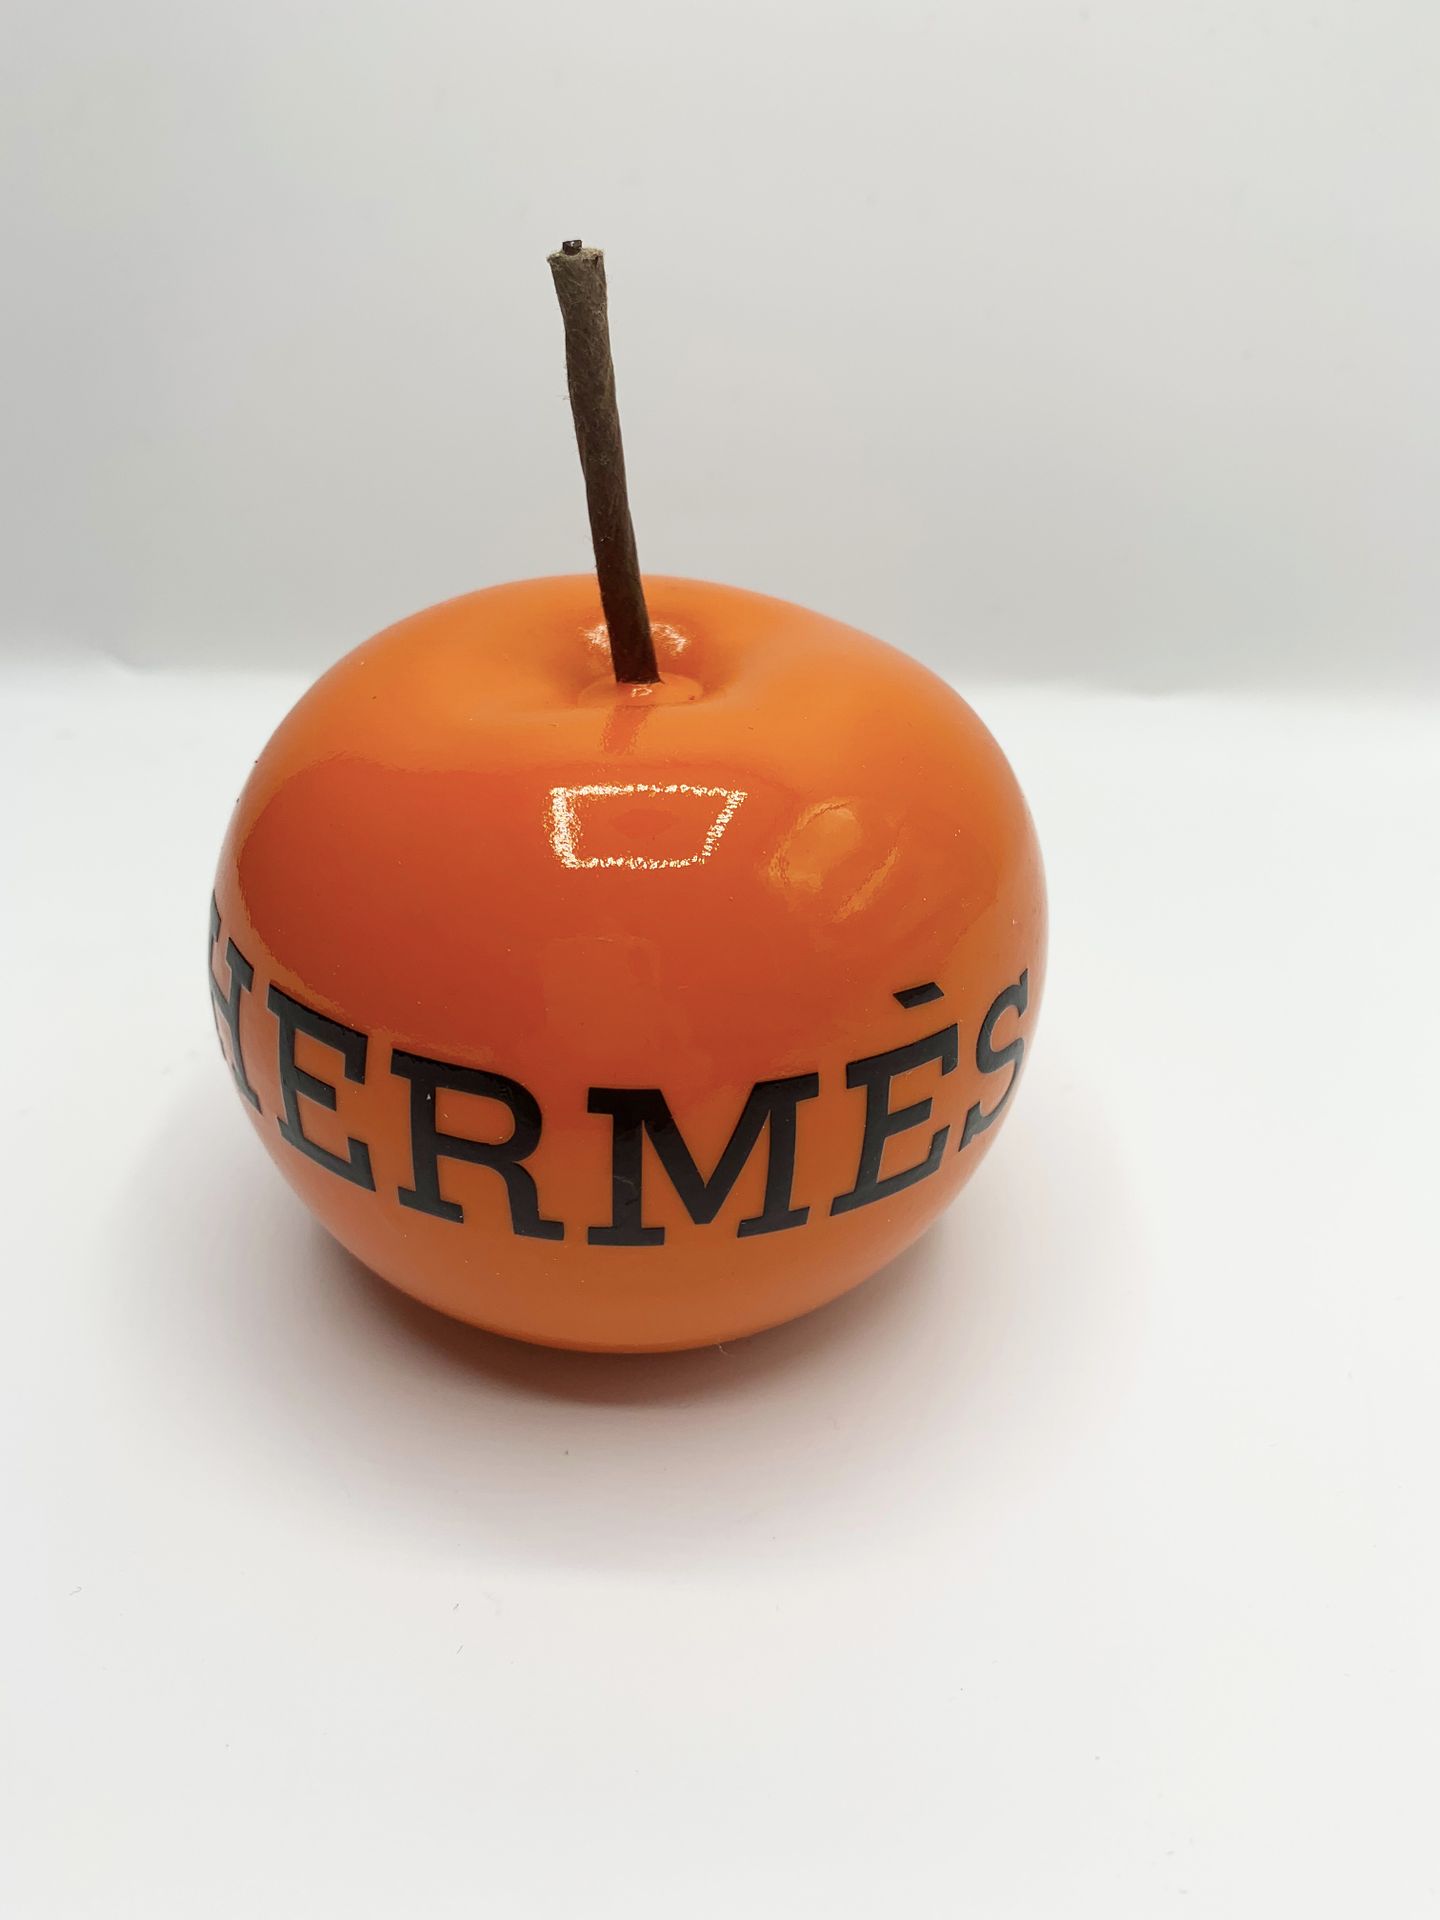 Benji Benji

Apple Hermes, 2021 

Résine peinte

Dimension 11 x 8,5 x 8,5

Editi&hellip;